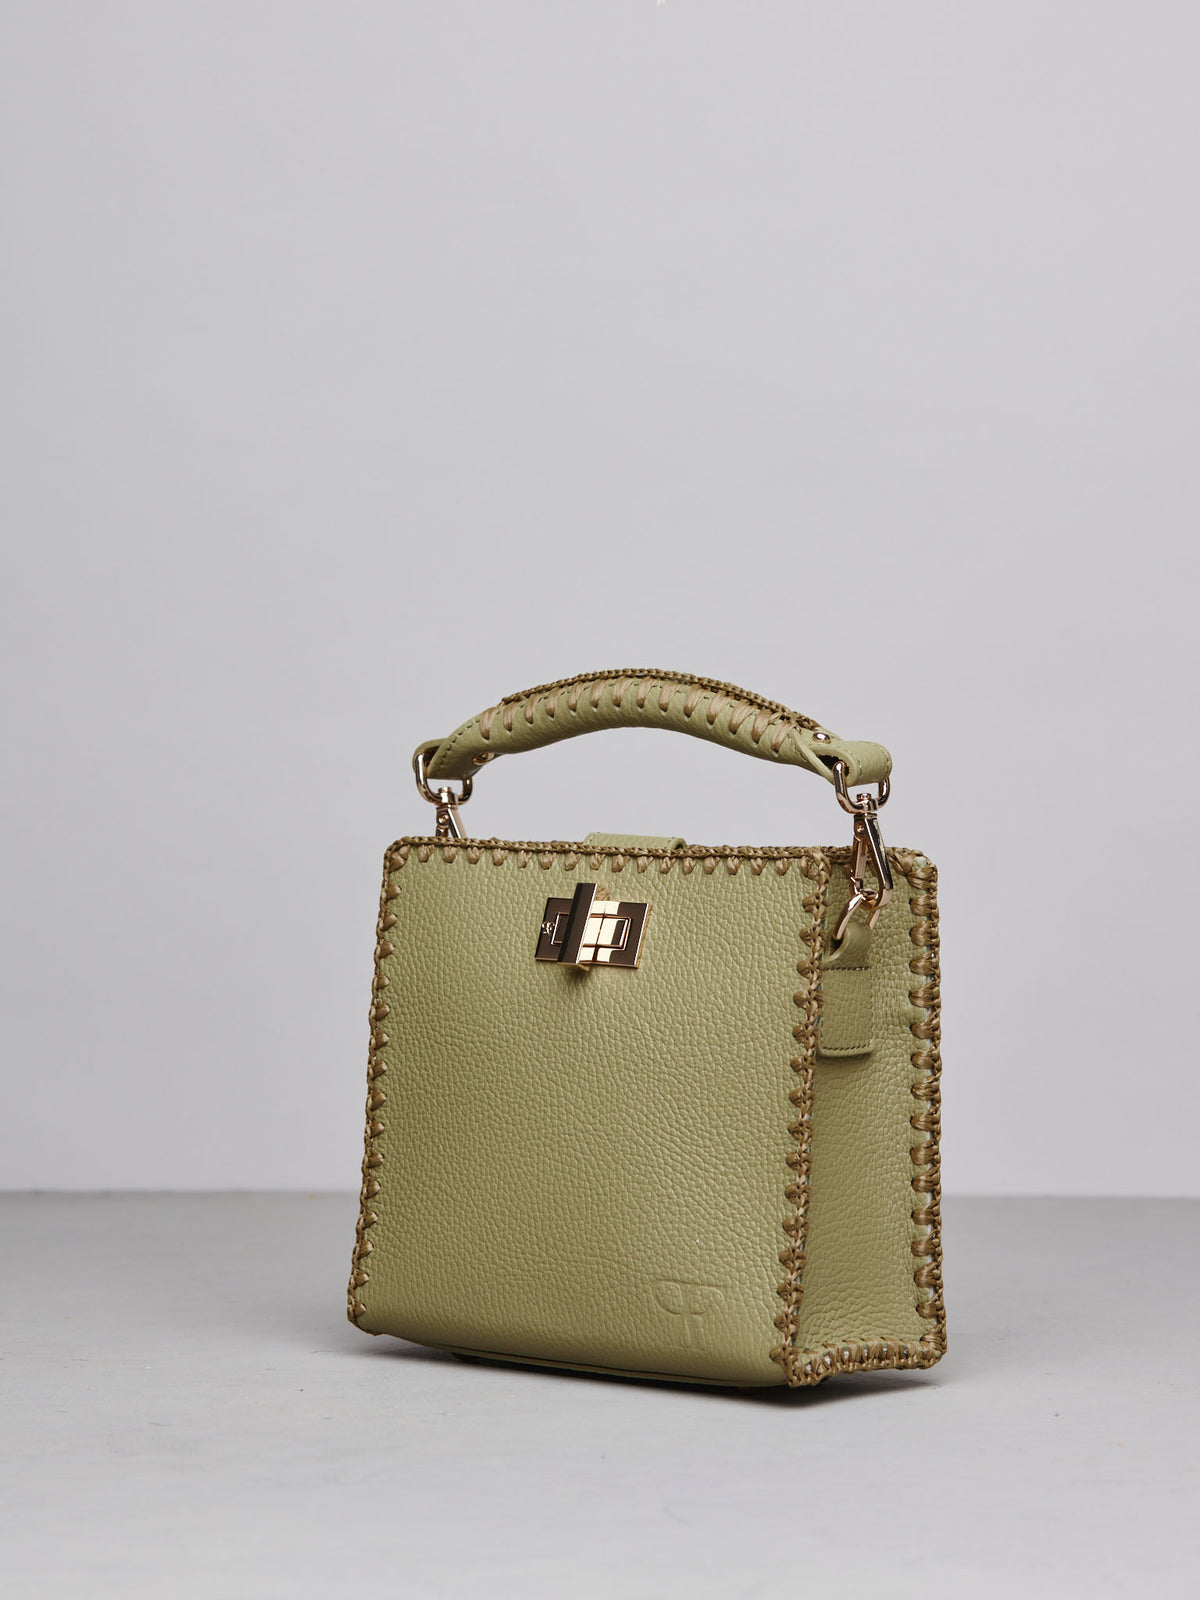 Sylvia Small Handbag in Olive